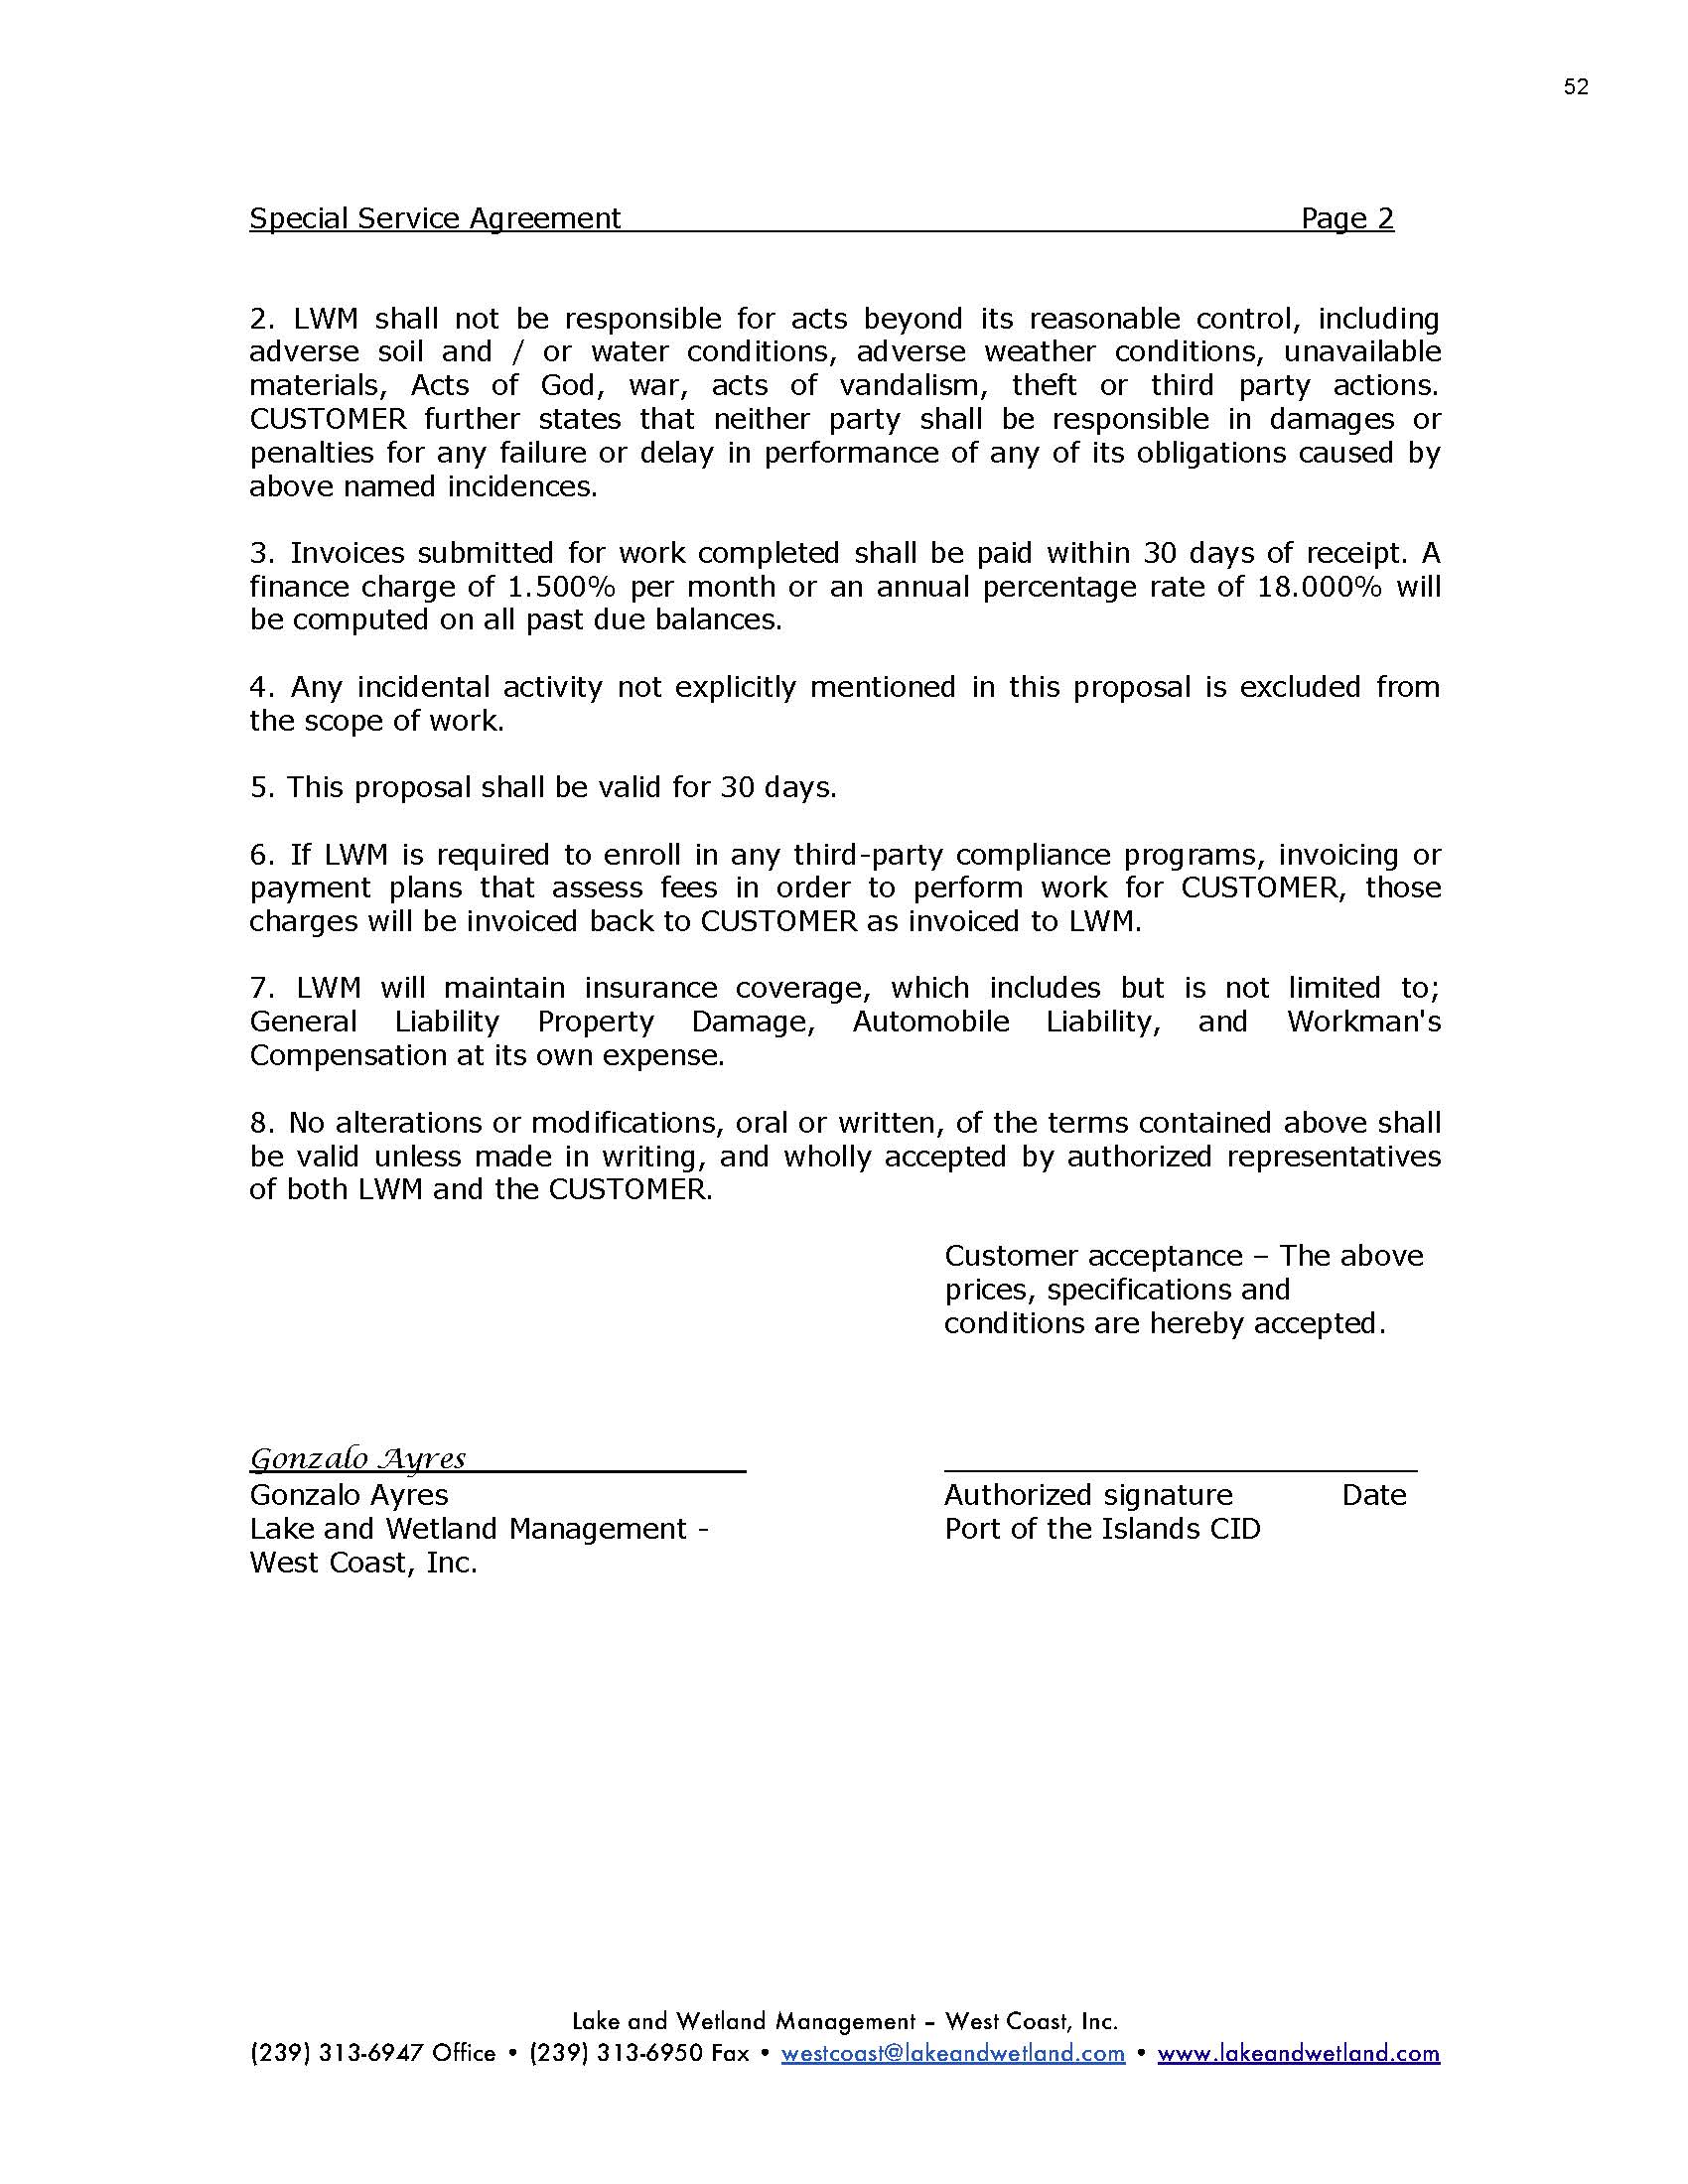 Lake & Wetlands Management Special Service Agreement Maintenance Agreement